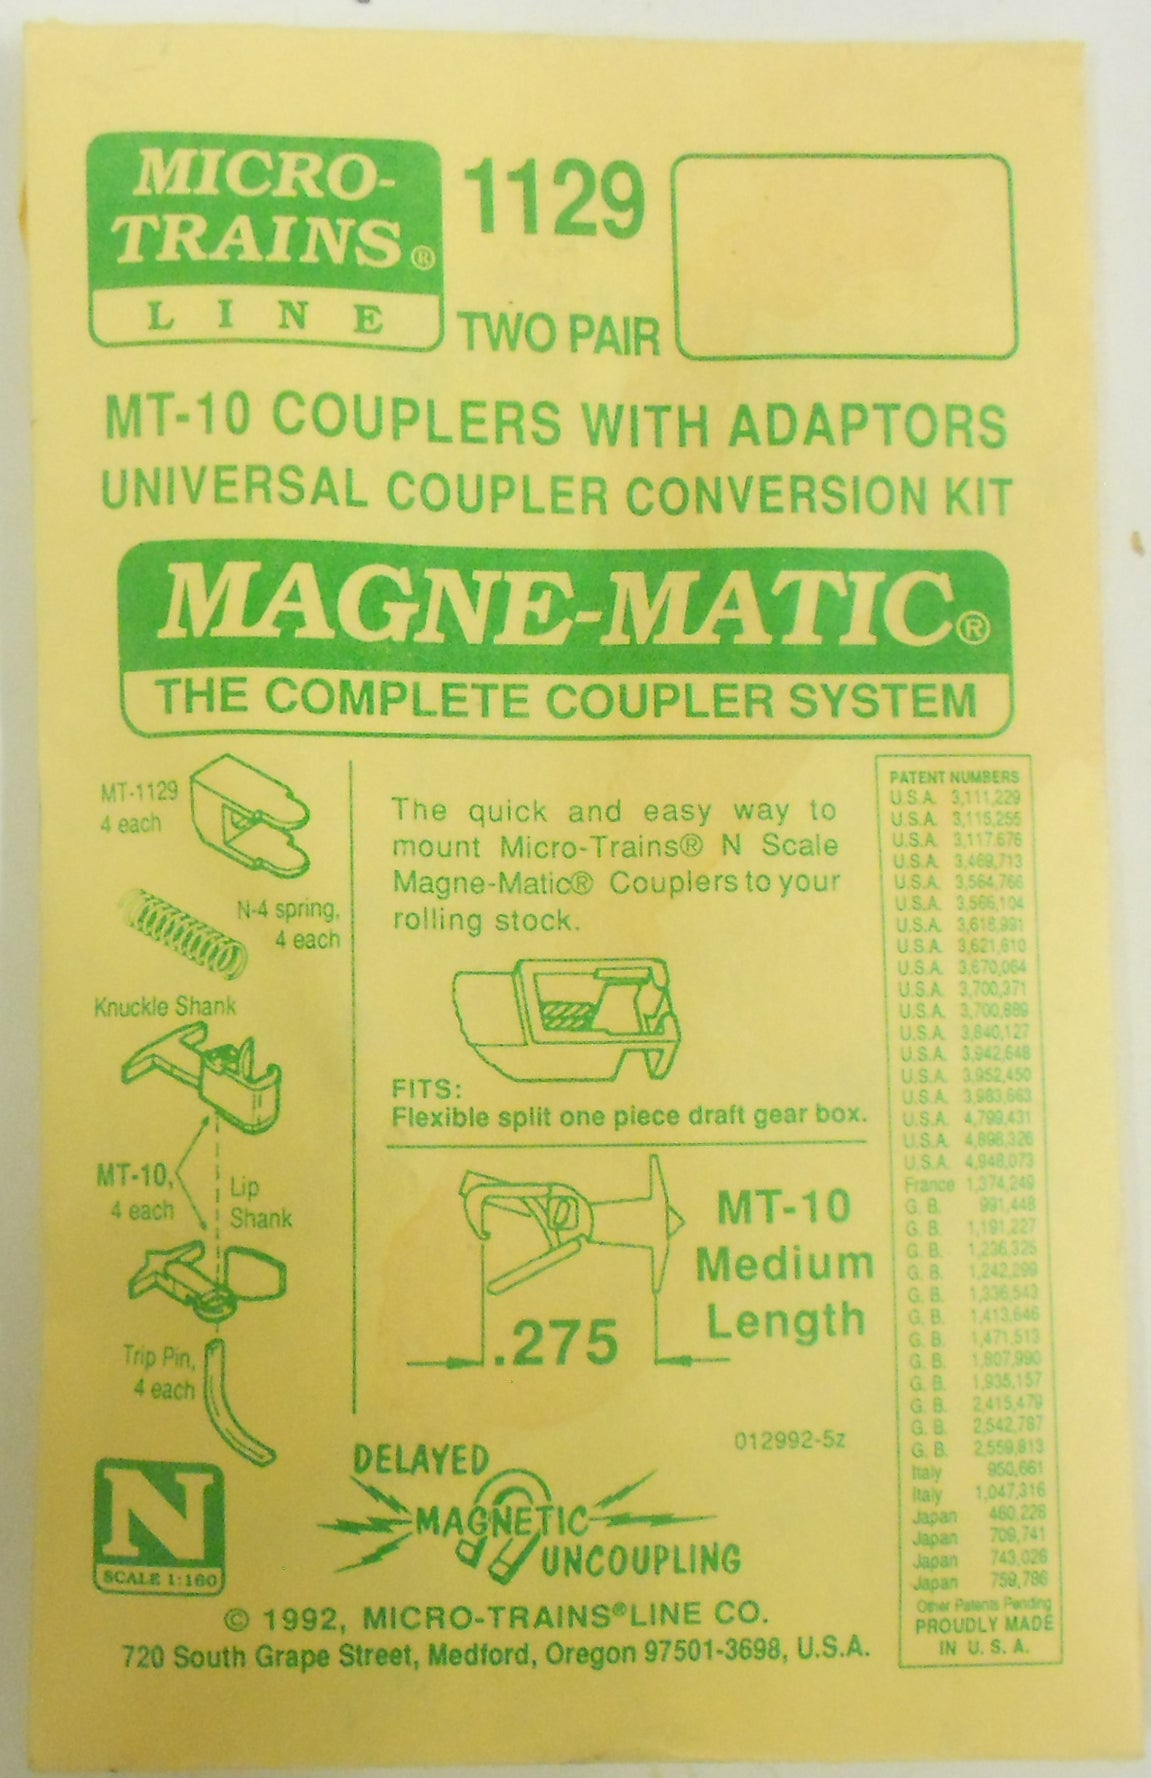 MicroTrains 00130013 N MT-10 Medium 'T' Shank Couplers with Adaptors (1129)